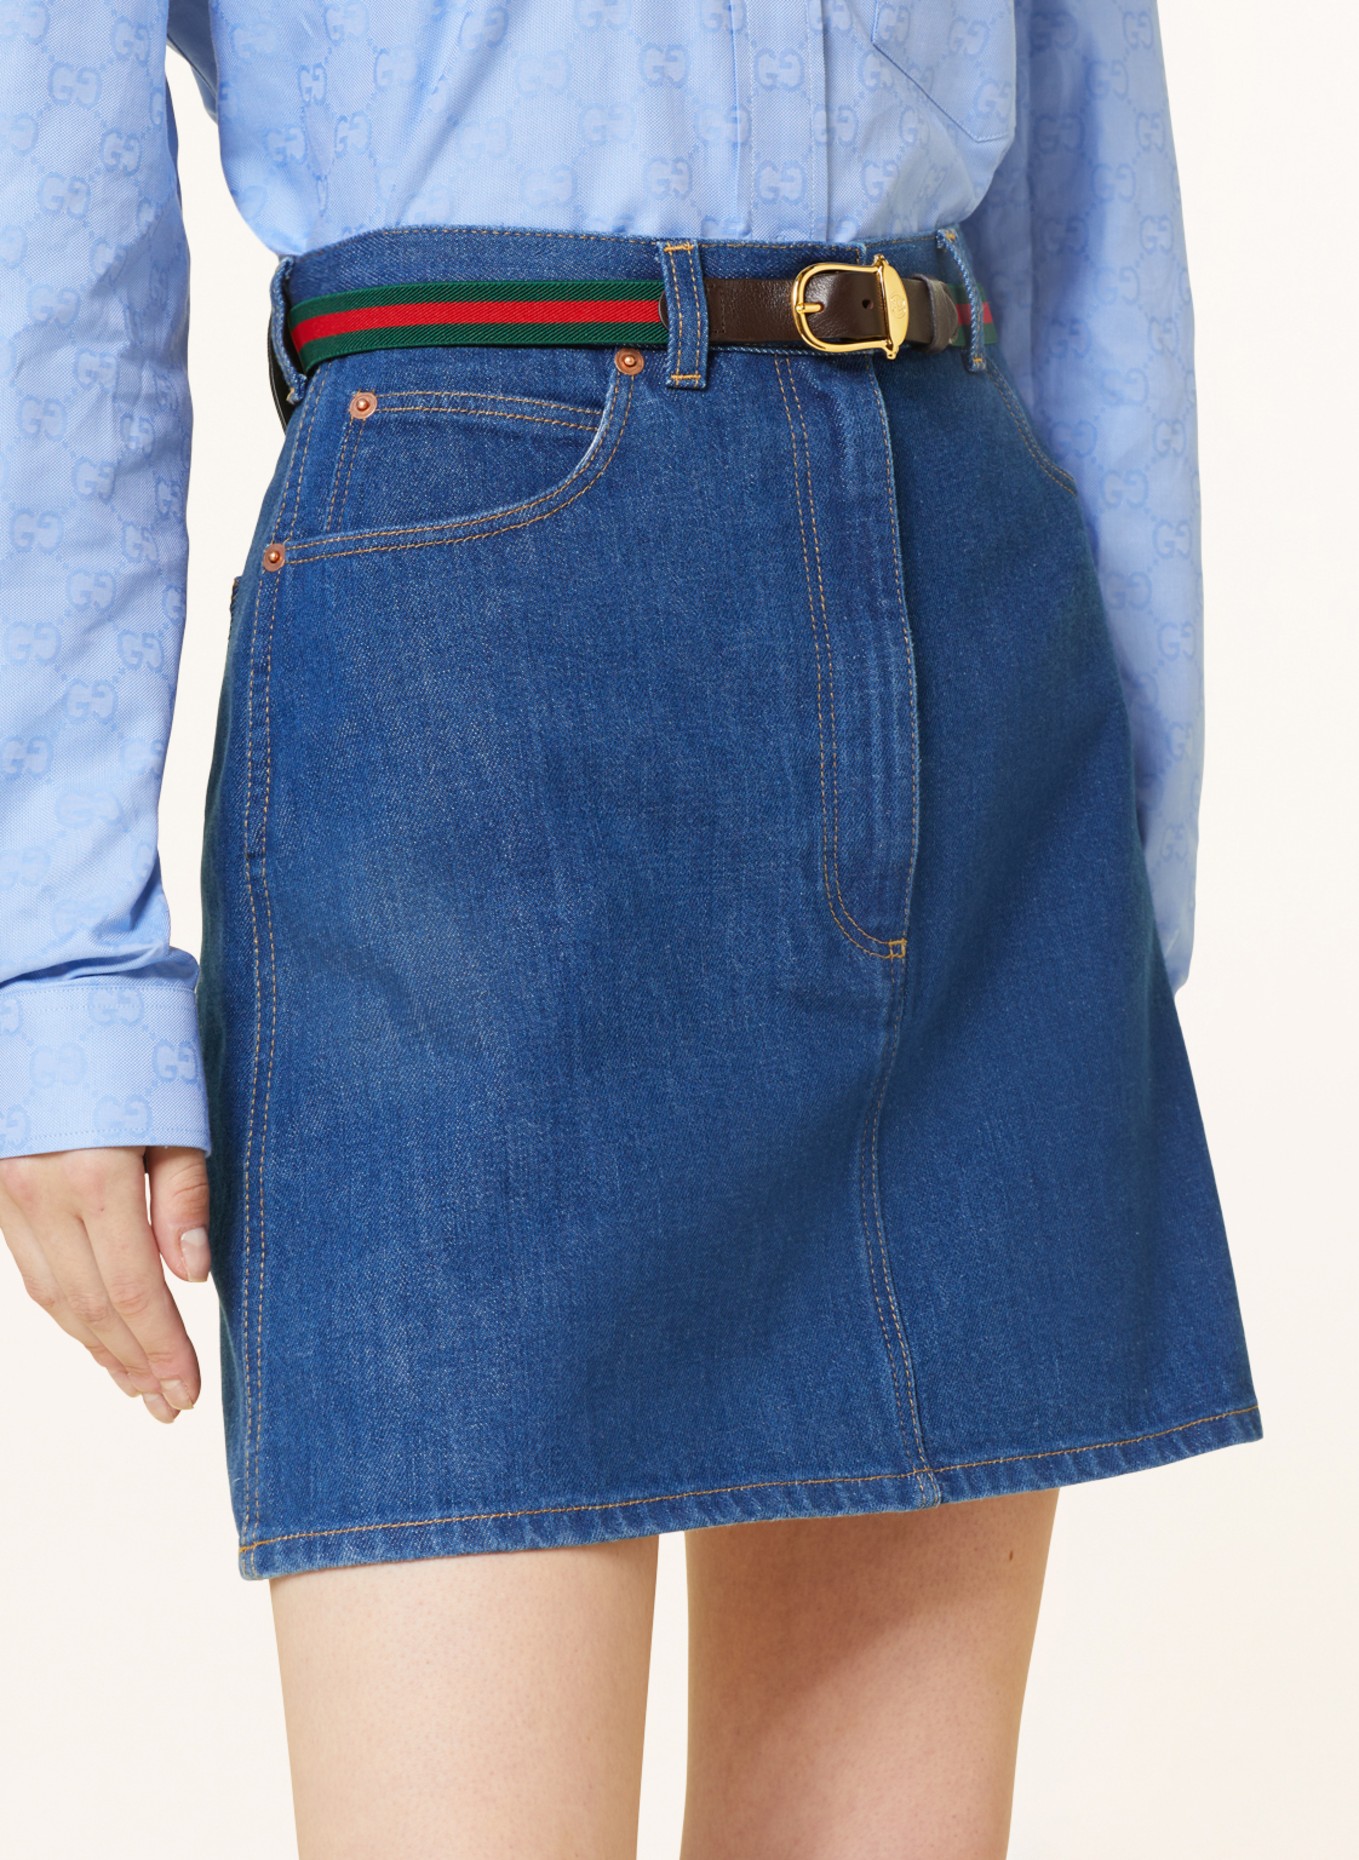 GUCCI Denim skirt, Color: 4759 DARK BLUE/MIX (Image 4)